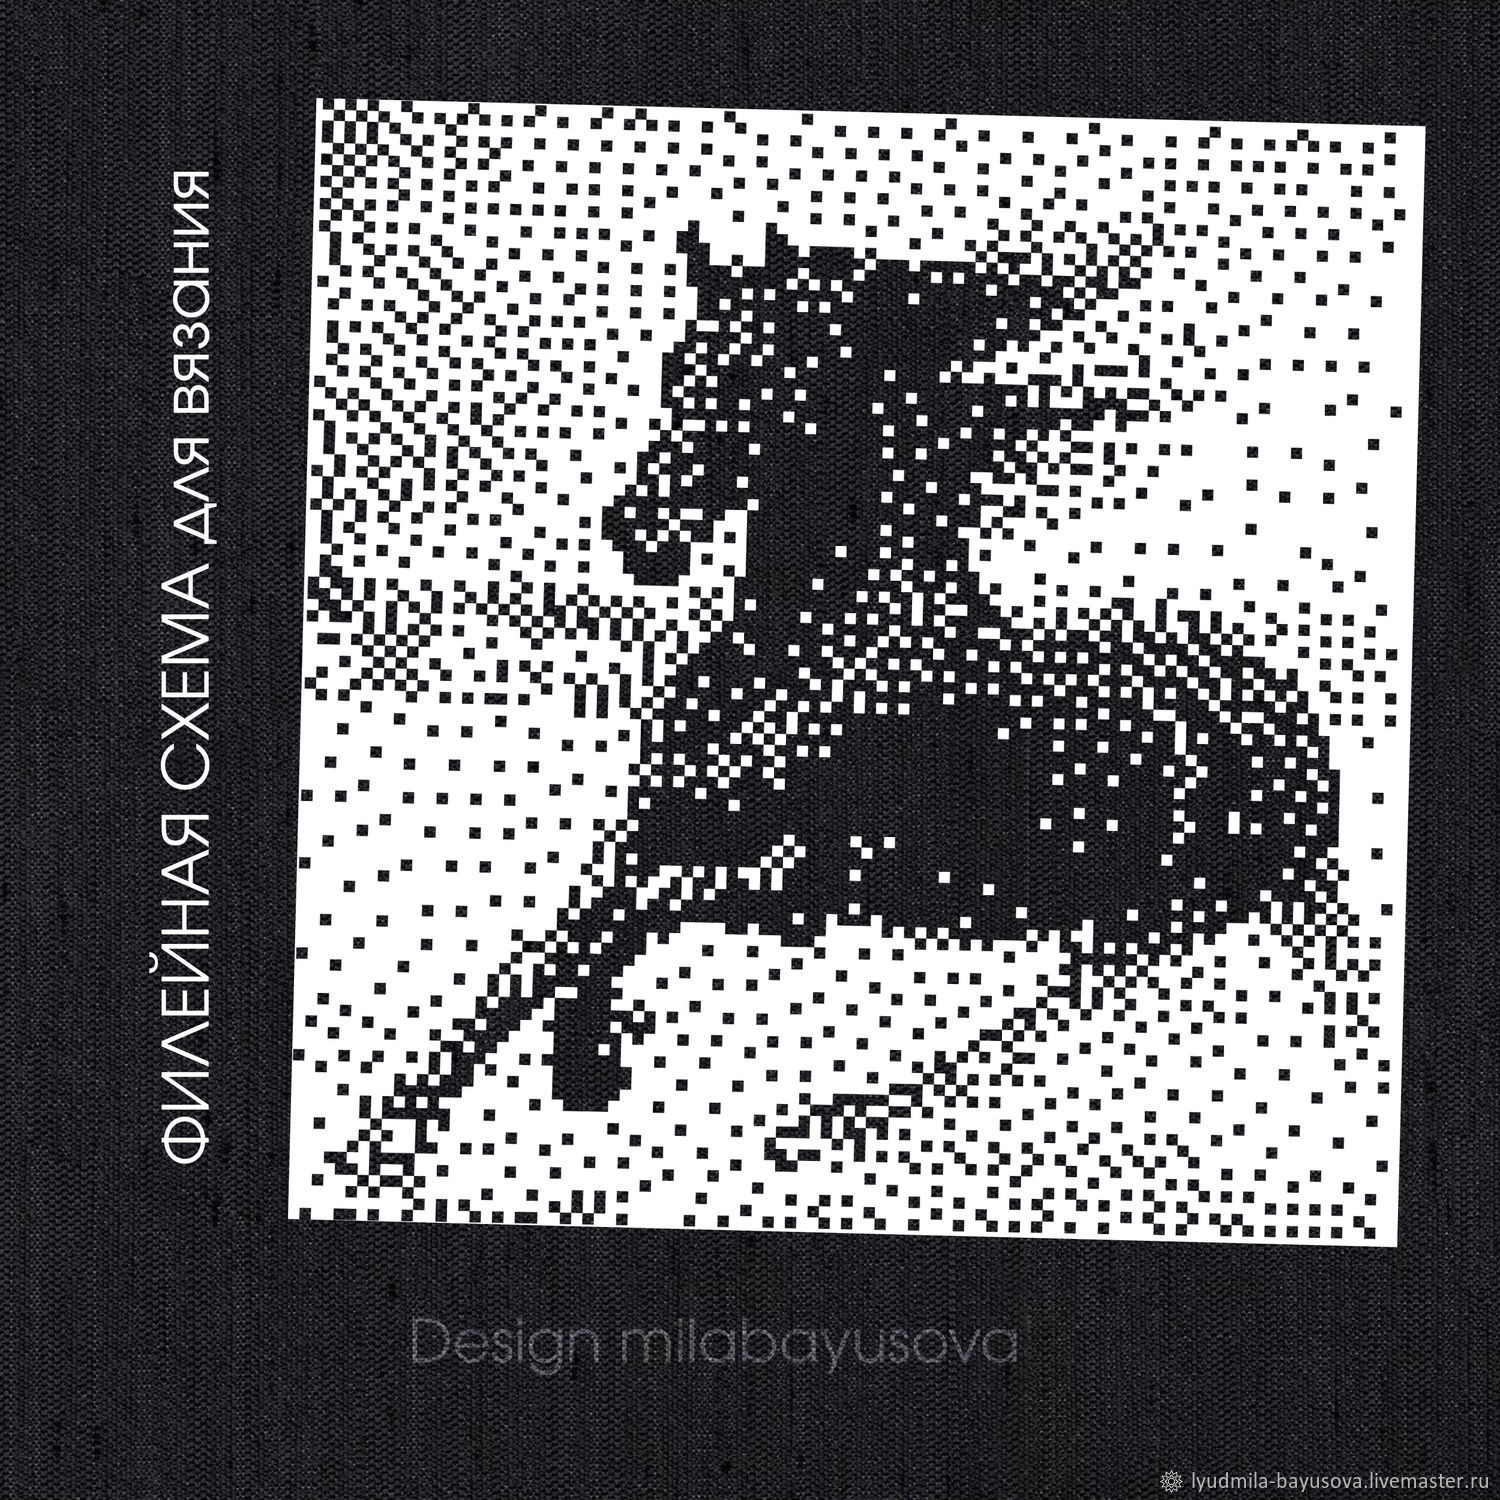 Лошадь из бисера: методика плетения с фото (4 видео) | Творчество | prazdniknvrs.ru